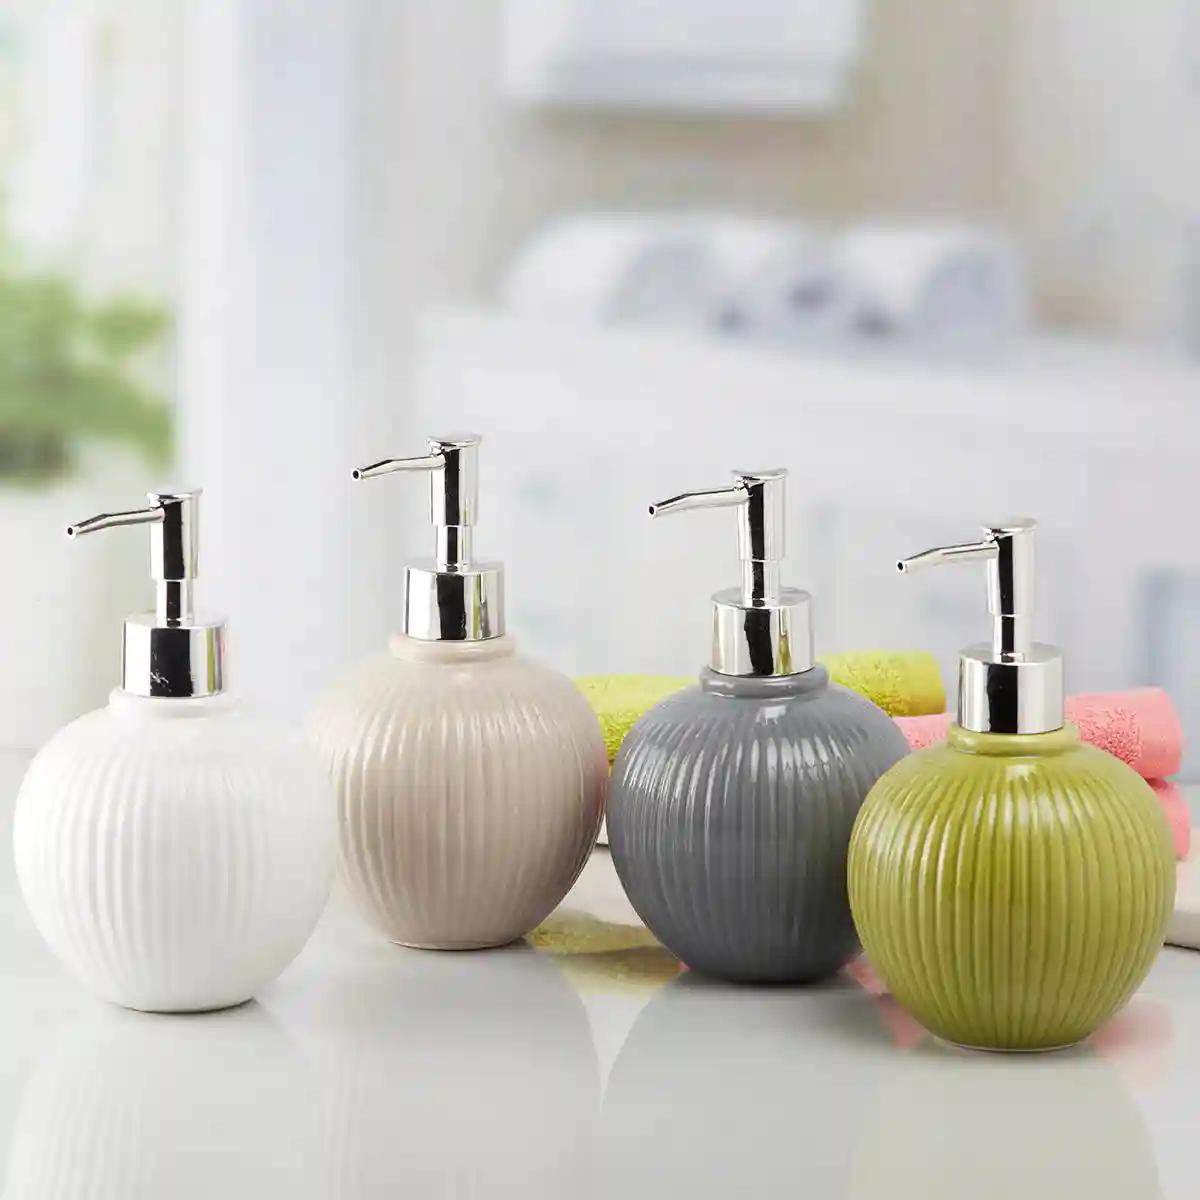 Kookee Ceramic Soap Dispenser for Bathroom handwash, refillable pump bottle for Kitchen hand wash basin, Set of 2 - White (8048)